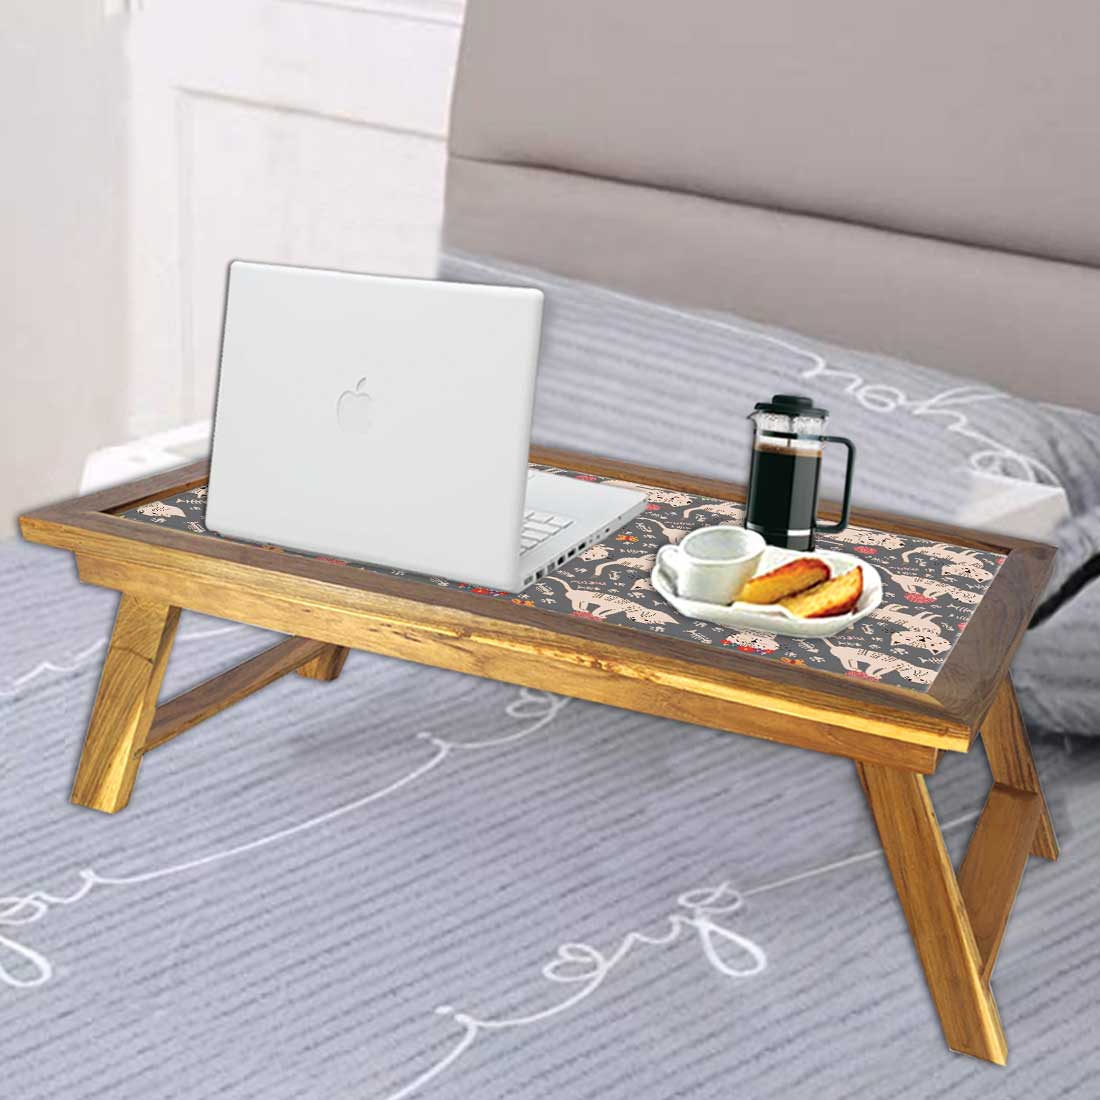 Folding Laptop Desk for Home Bed Breakfast Table Wooden Study Desk - Cat Nutcase